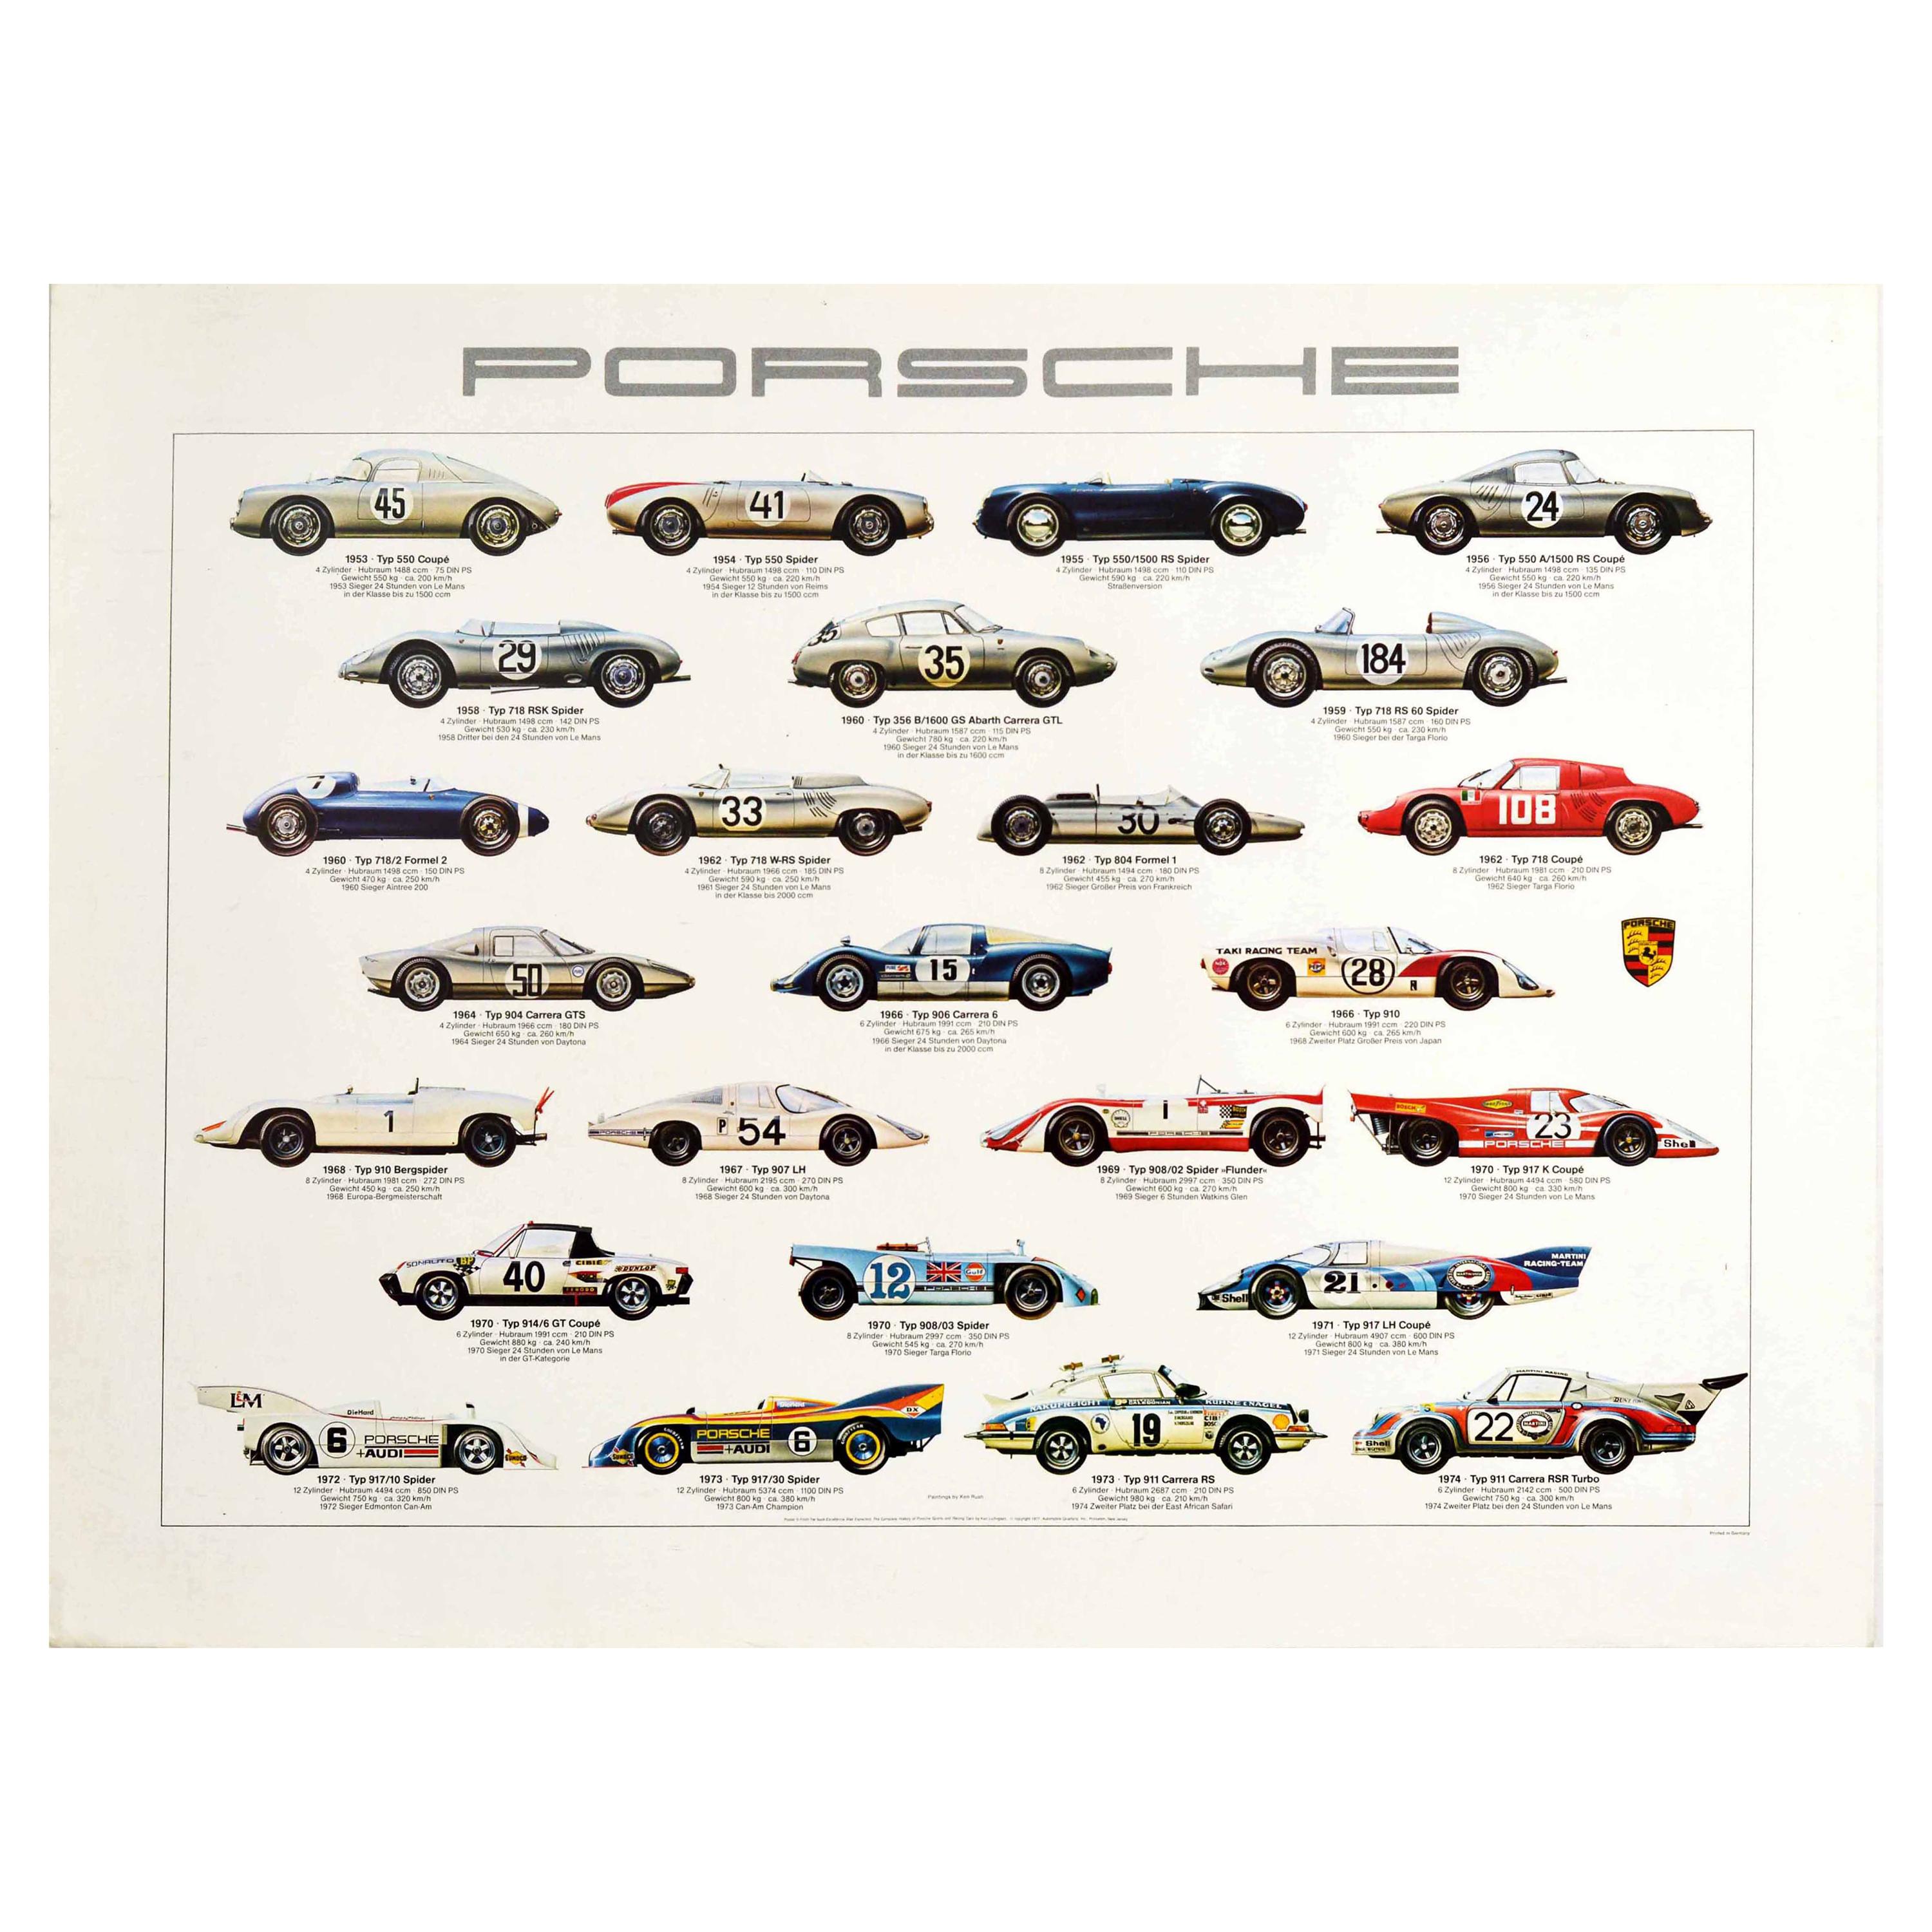 Original Vintage Auto Poster Porsche Racing Cars Motorsport Iconic Models Design